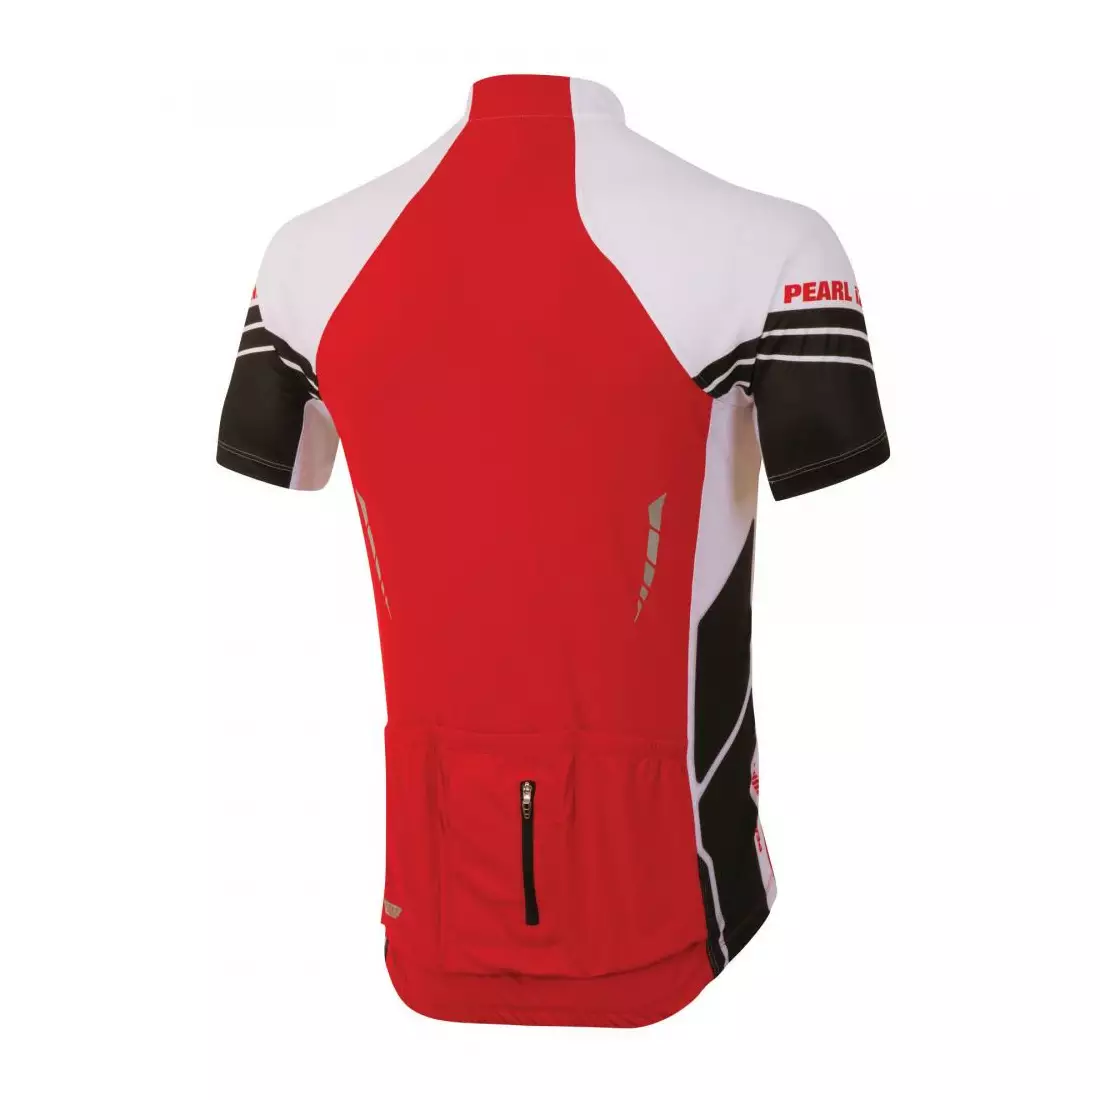 PEARL IZUMI - ELITE 11121301-3DJ - light cycling jersey, red